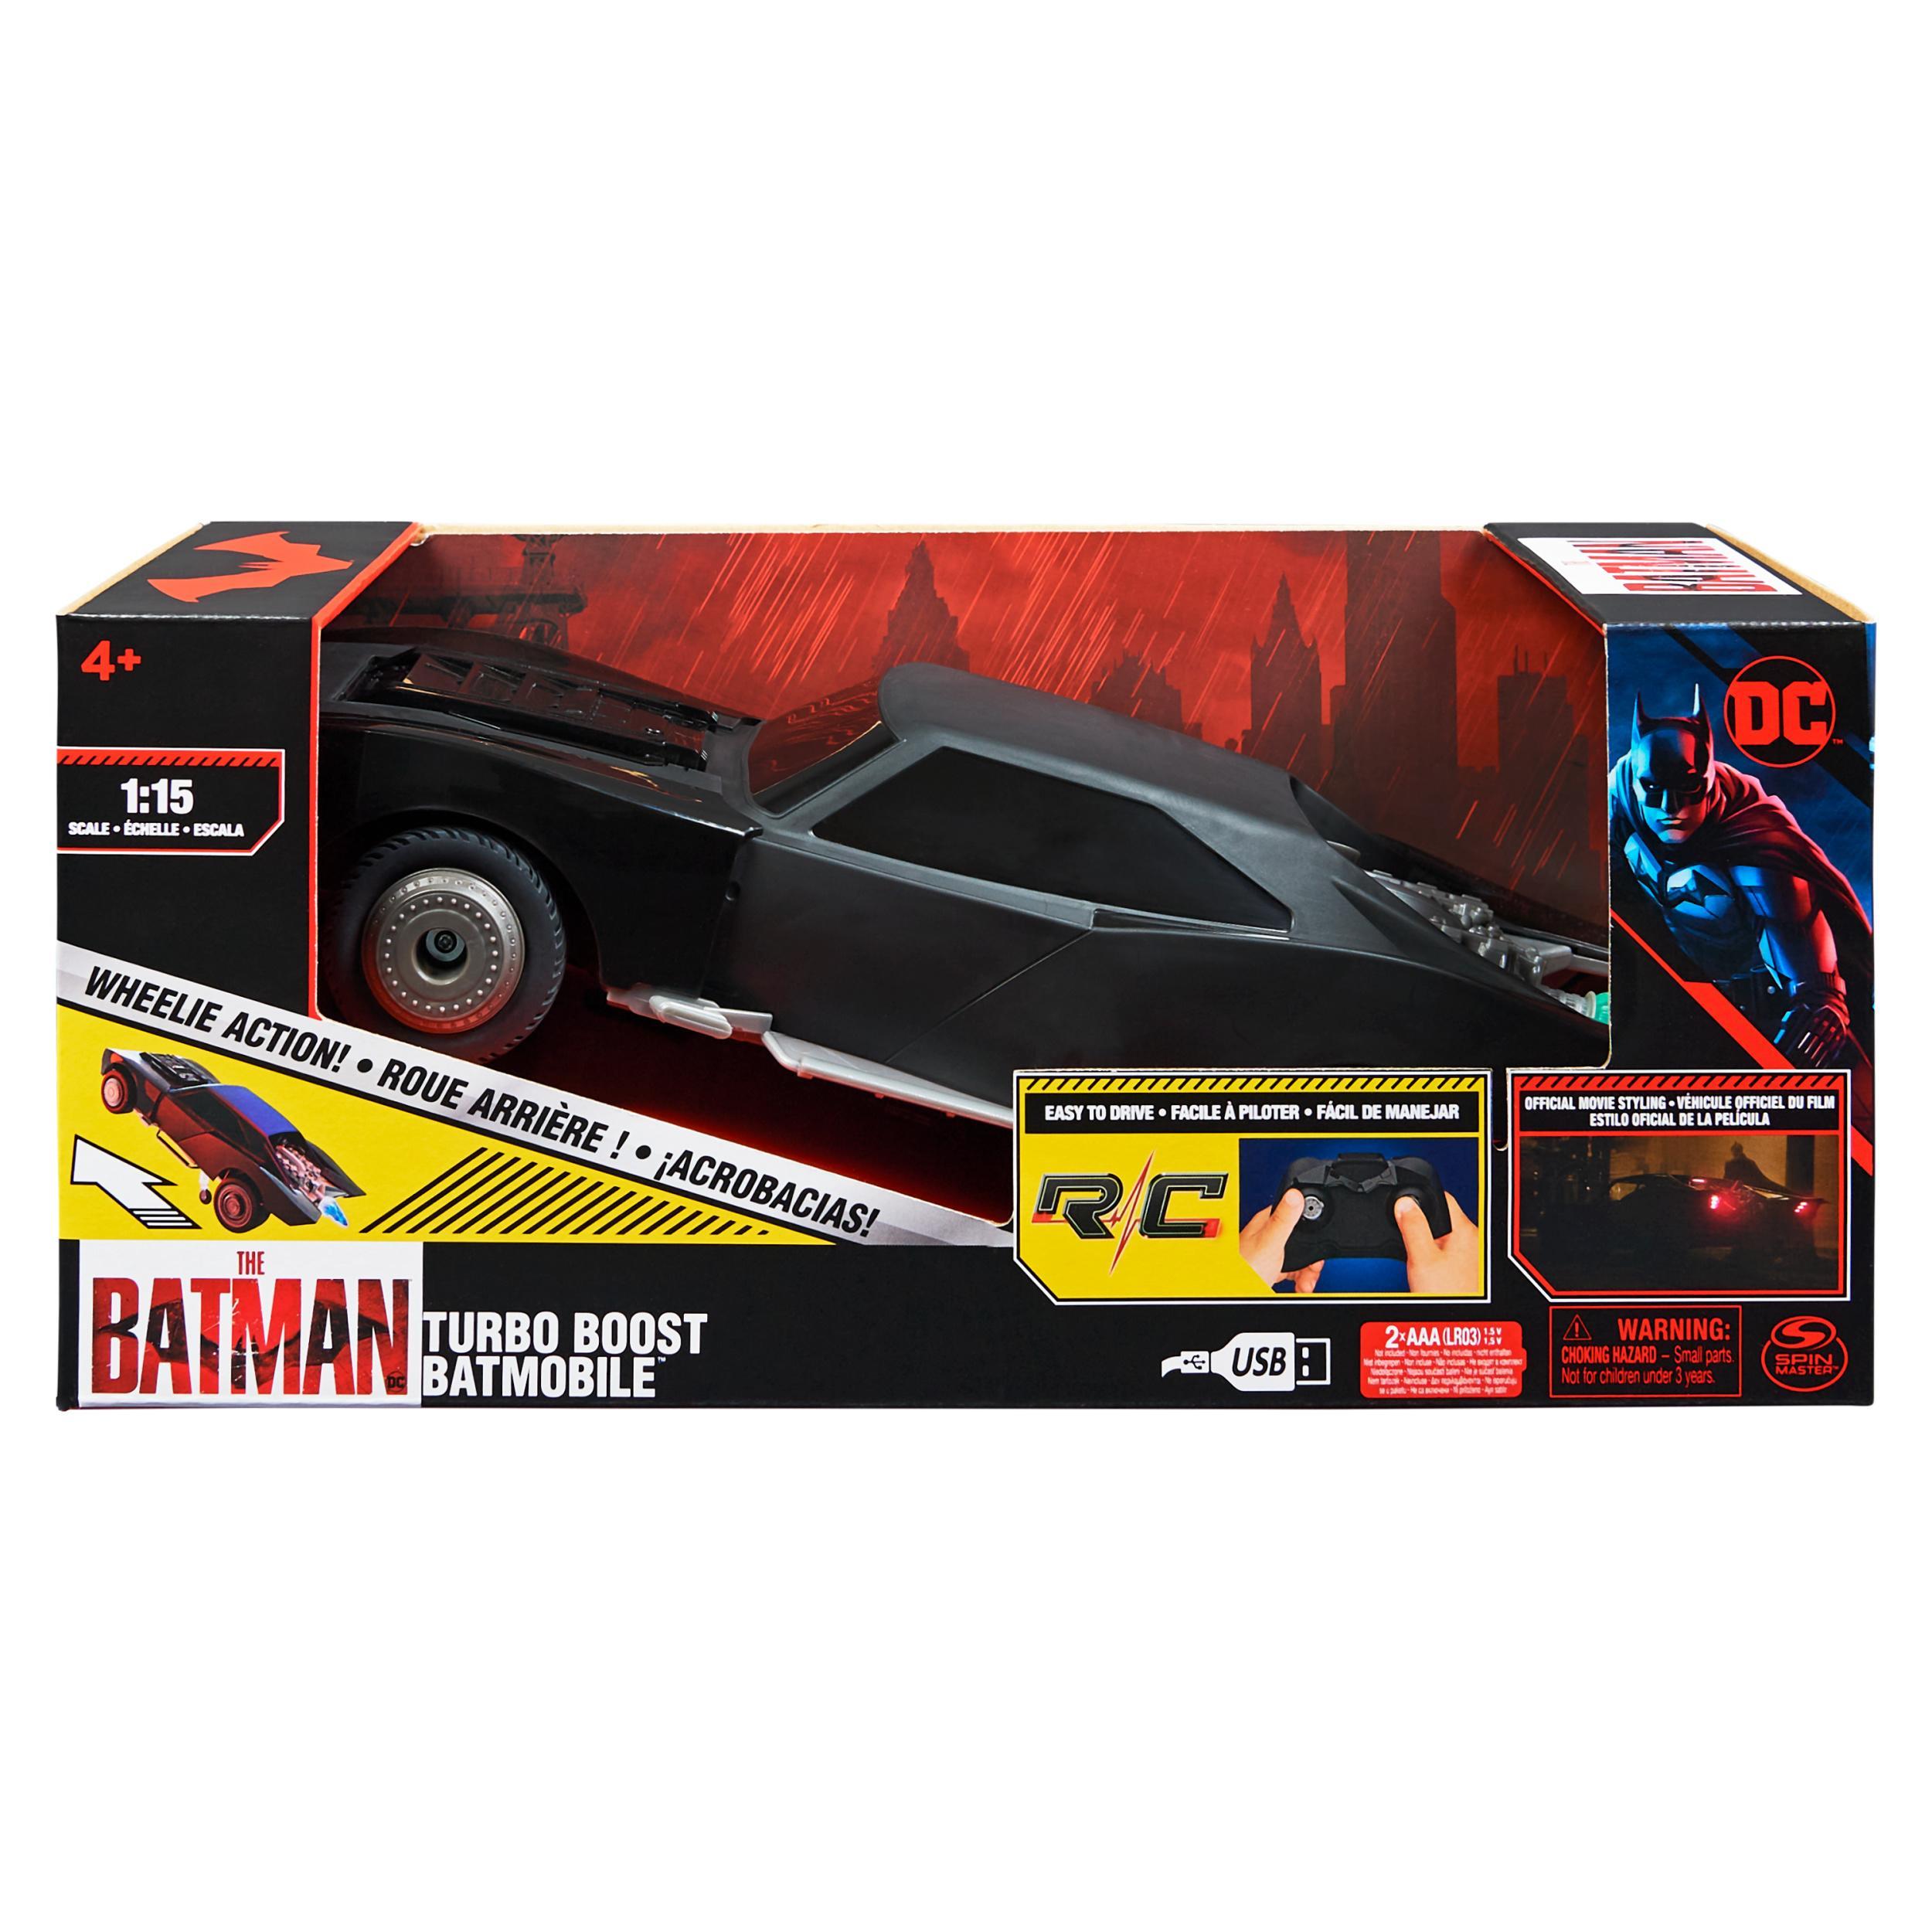 Batman Rc Batmobile: Top Features of the Batman RC Batmobile